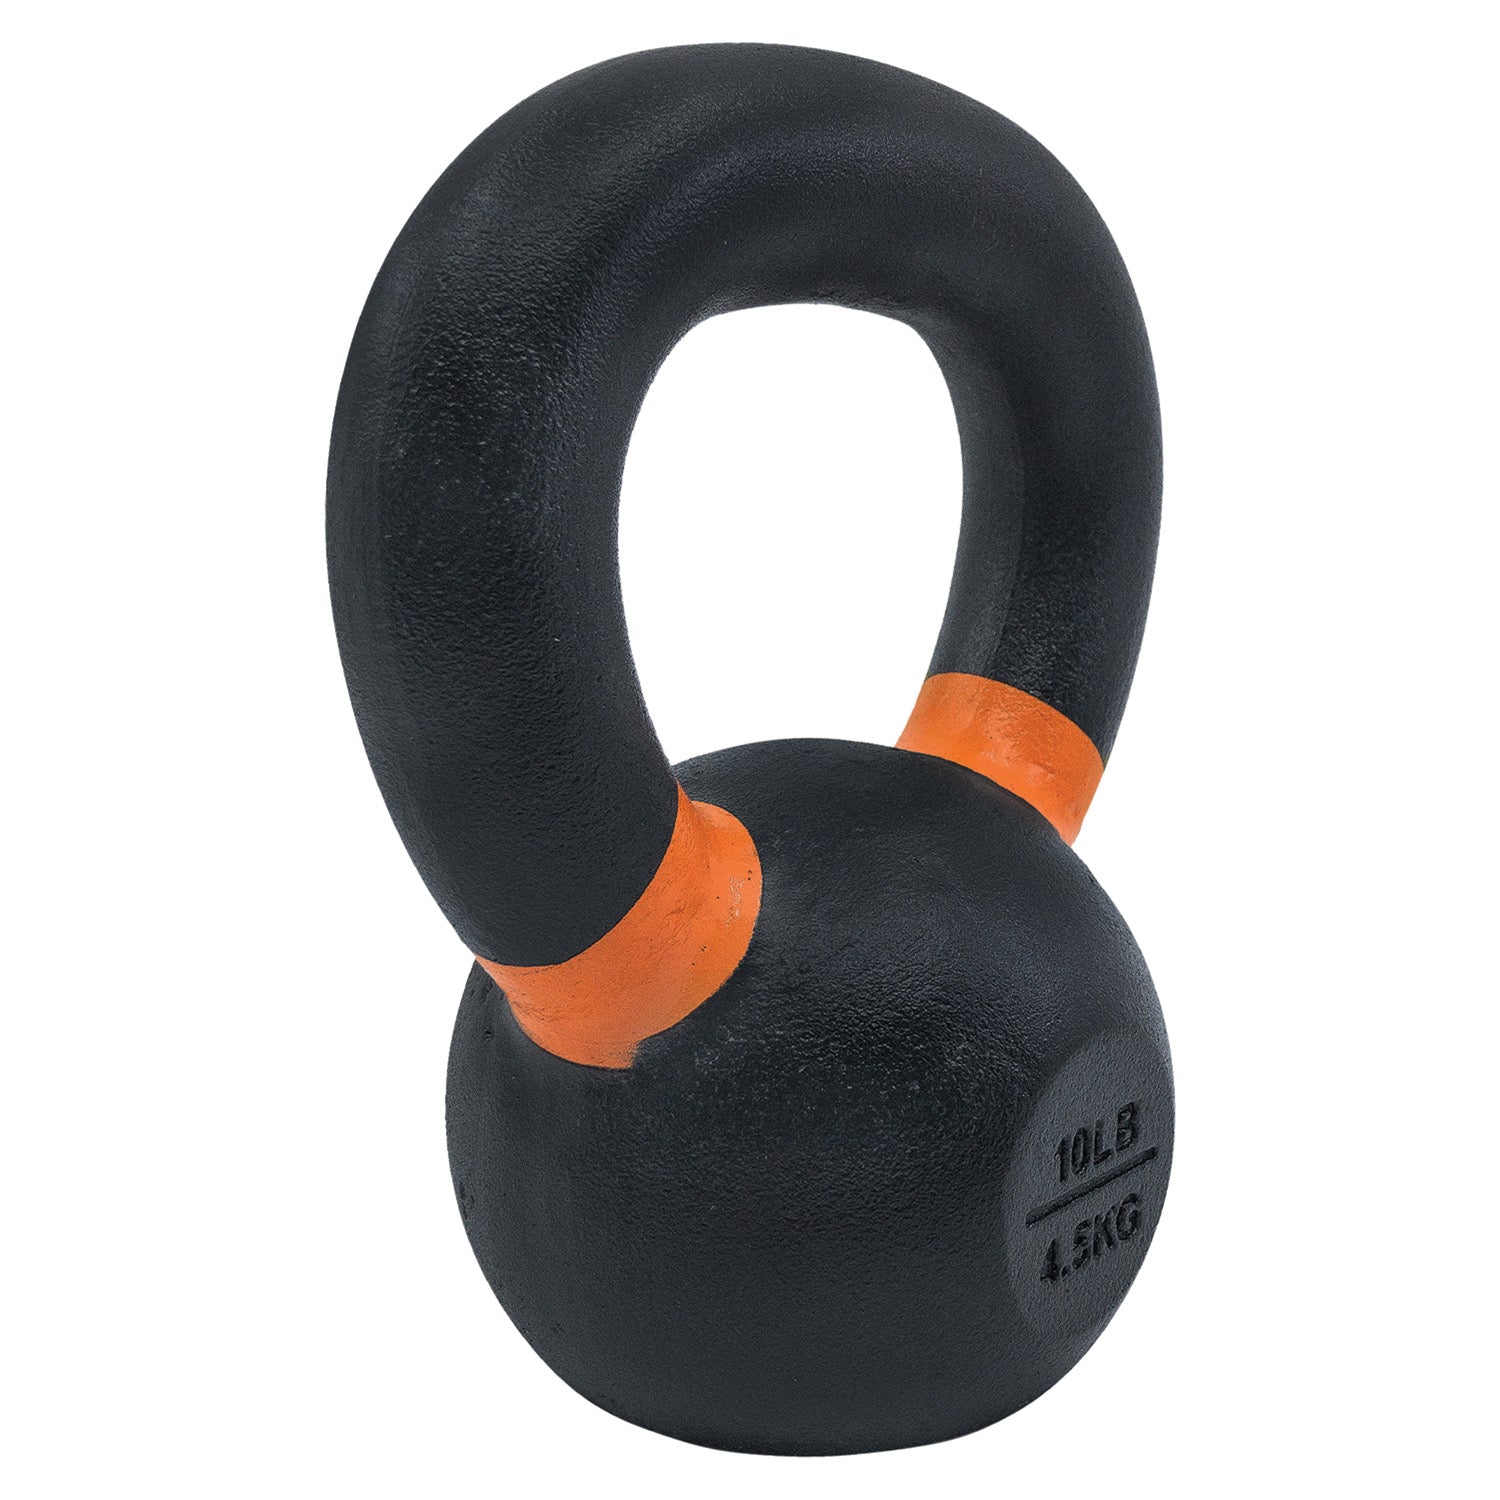 RHINO Fitness® Iron Kettlebell Series 10 lb RHINO Fitness fitness kettlebell Resistance Training